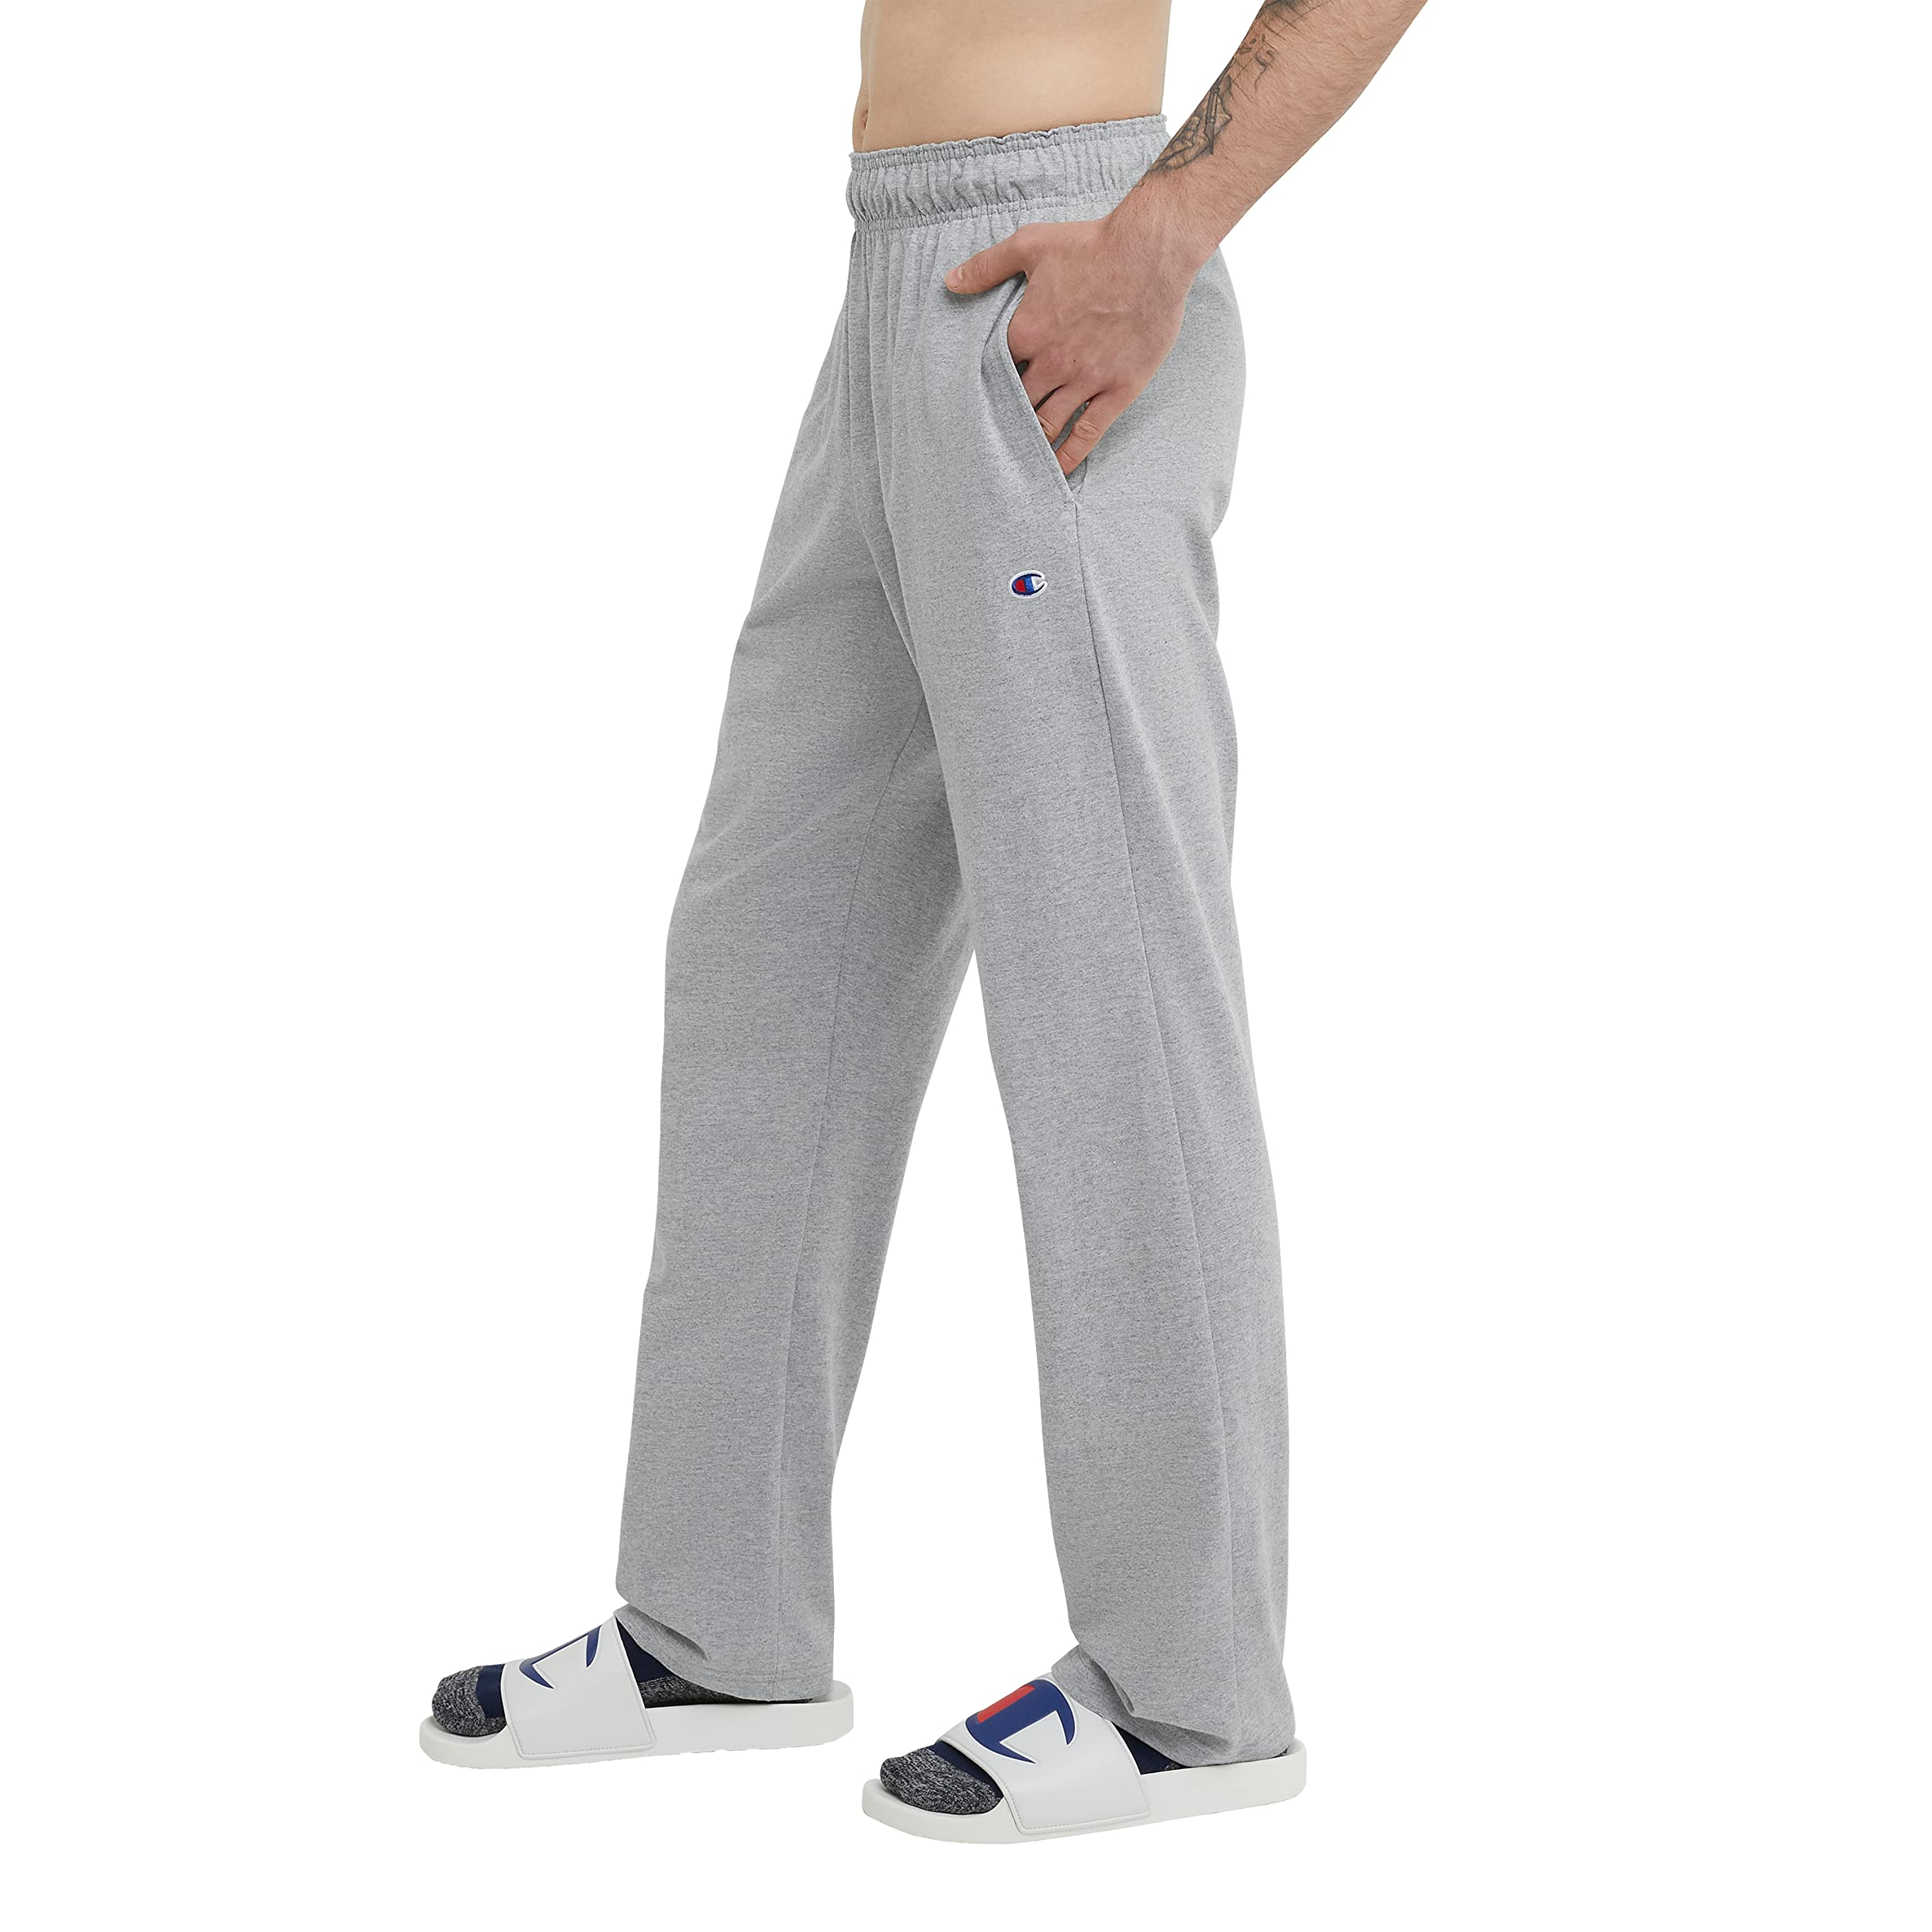 Champion Men's Pants, Everyday Cotton Pants for Men, Open Bottom Pants (Reg. Or Big & Tall)